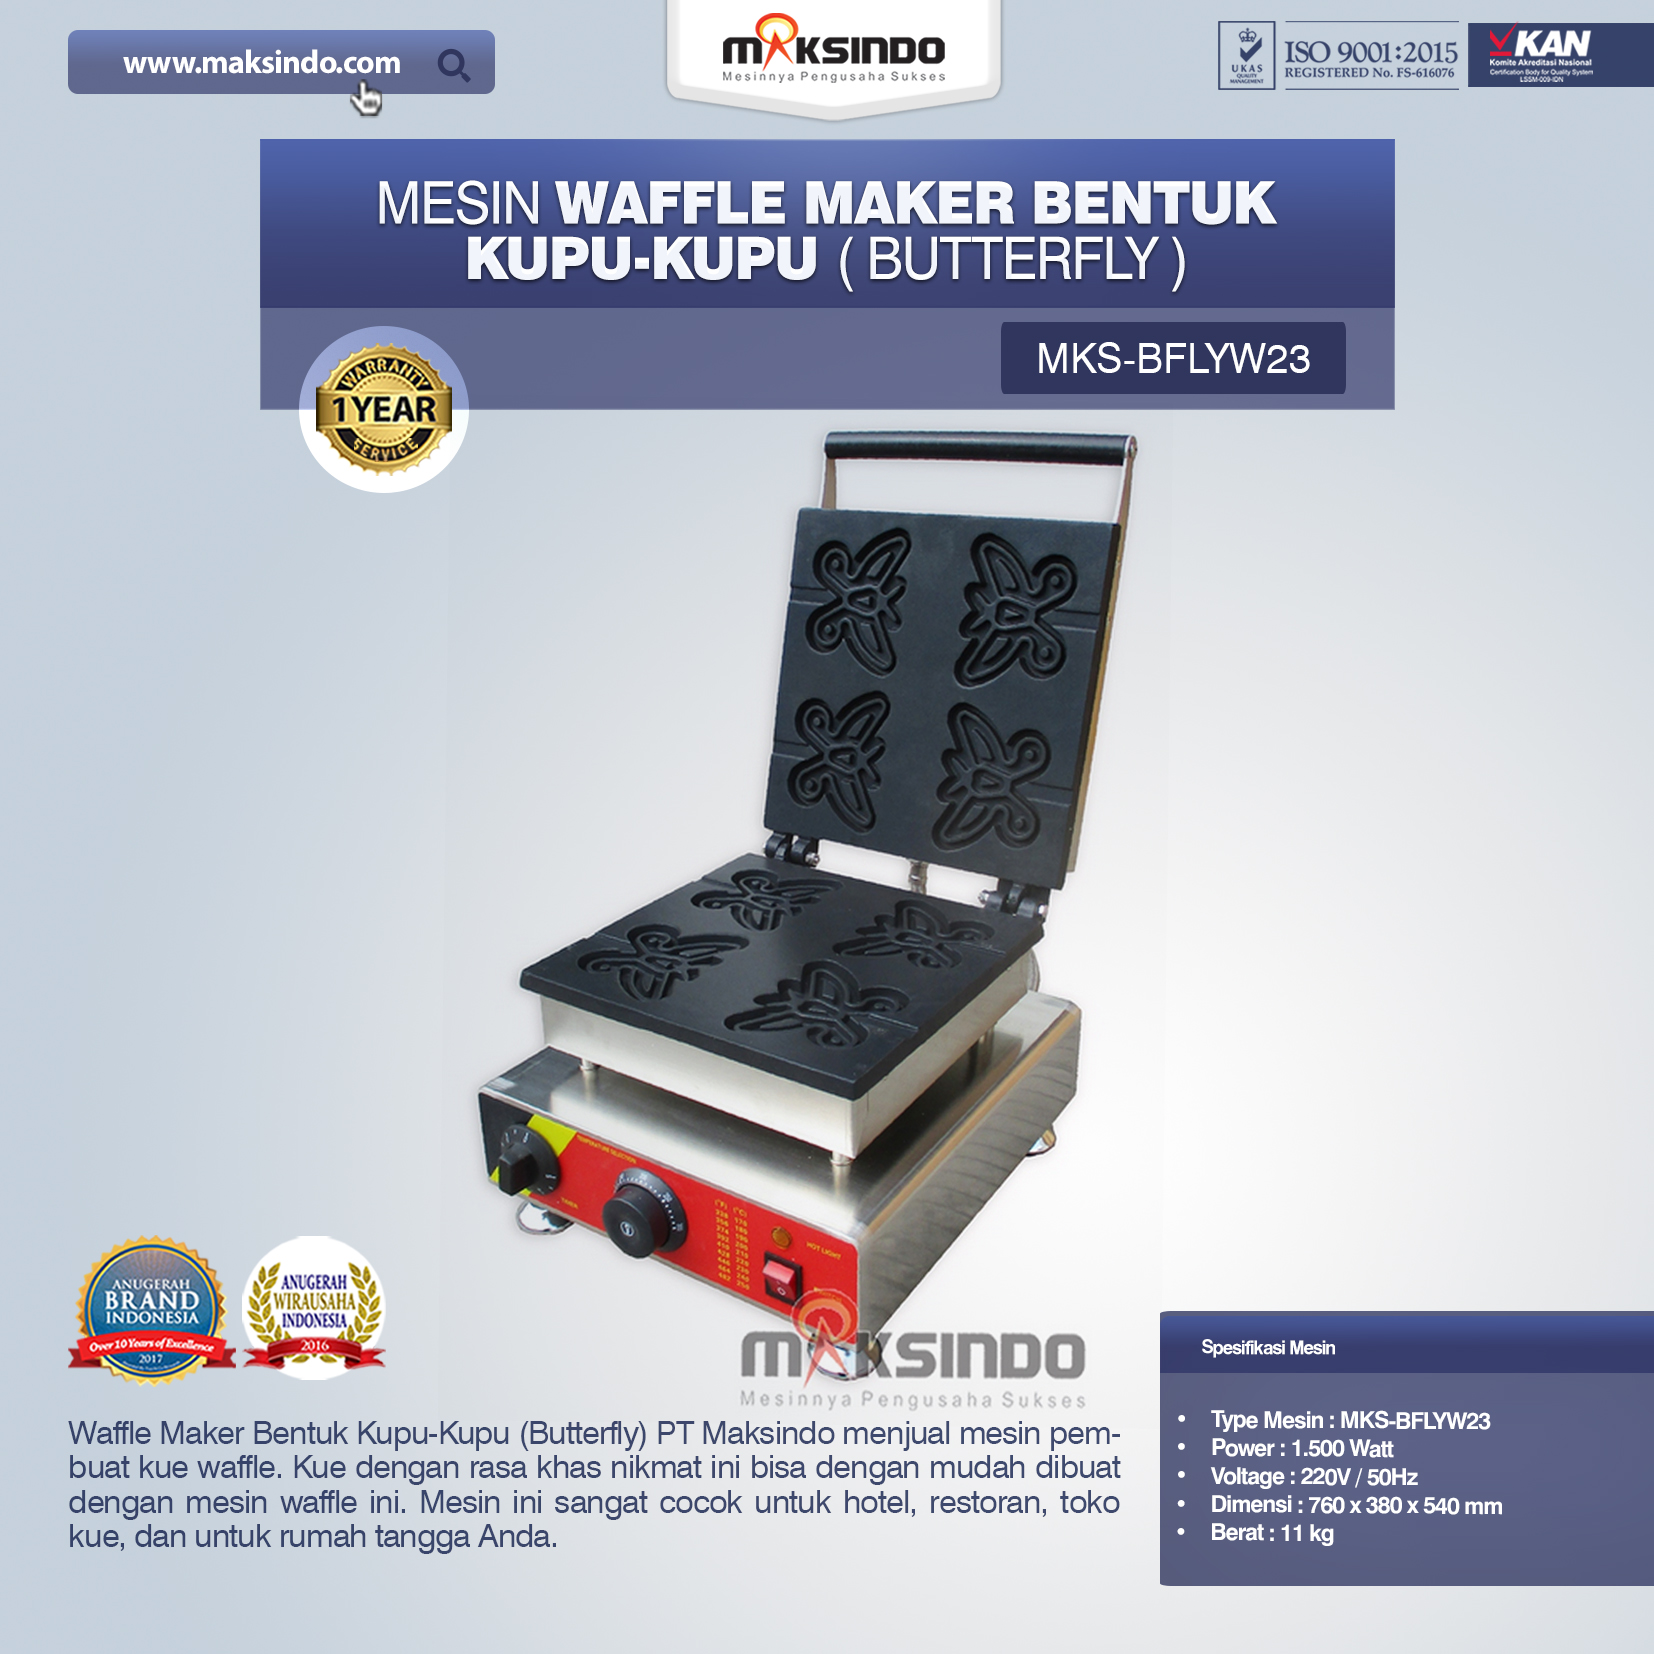 Jual Mesin Waffle Maker Bentuk Kupu-Kupu (Butterfly) MKS-BFLYW23 di Bali